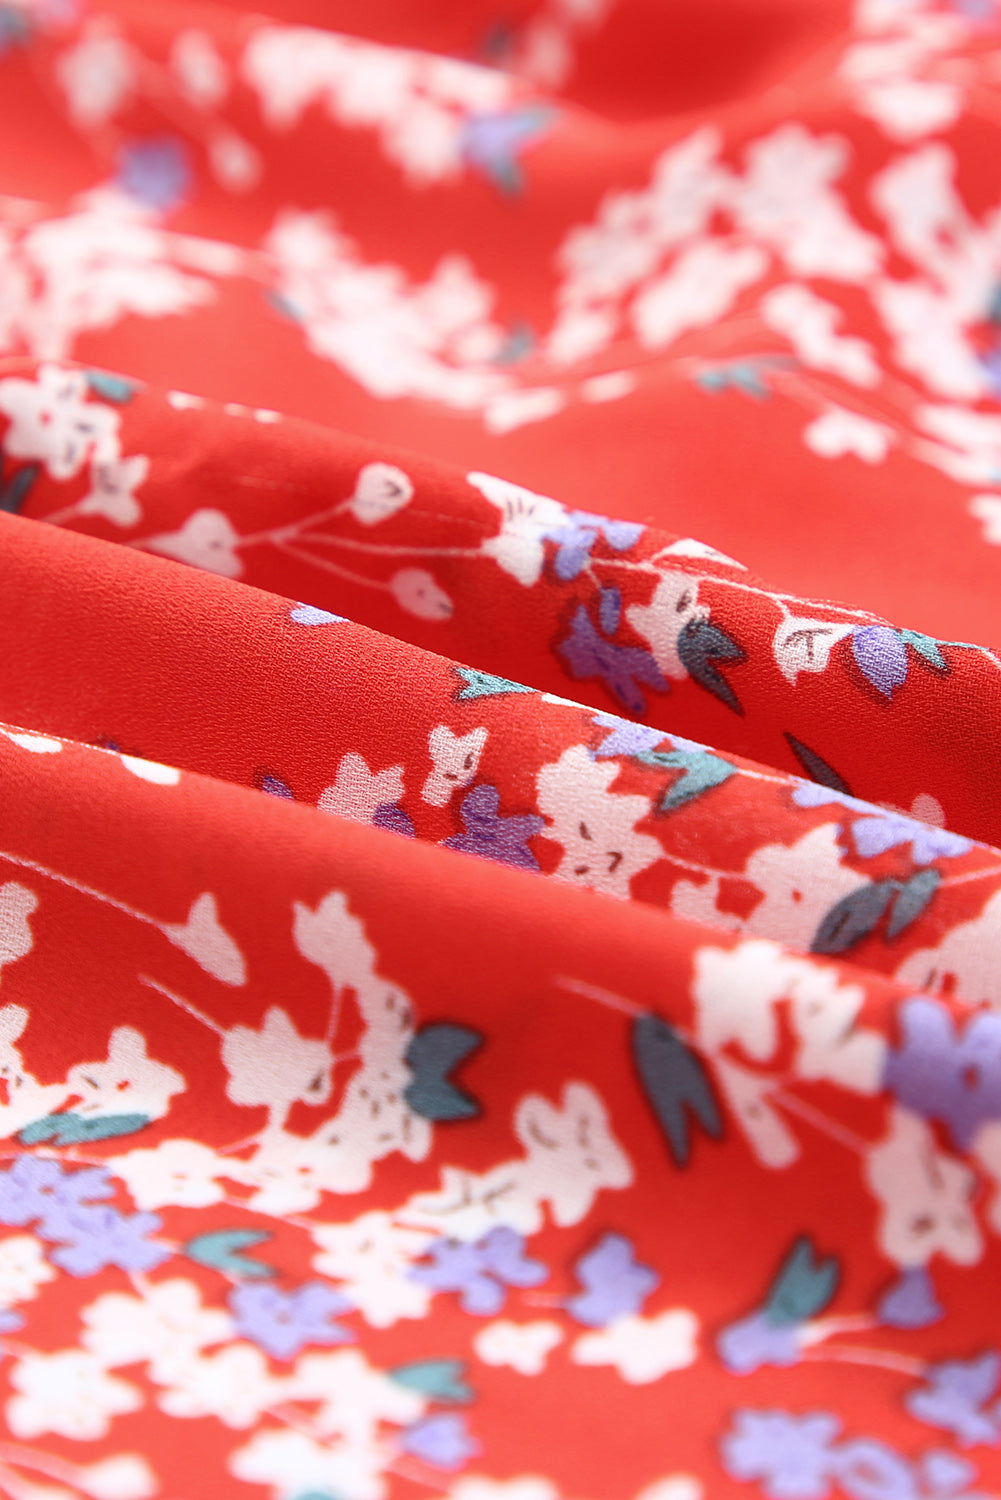 Vibrant Red Floral Crop Top Maxi Skirt Set